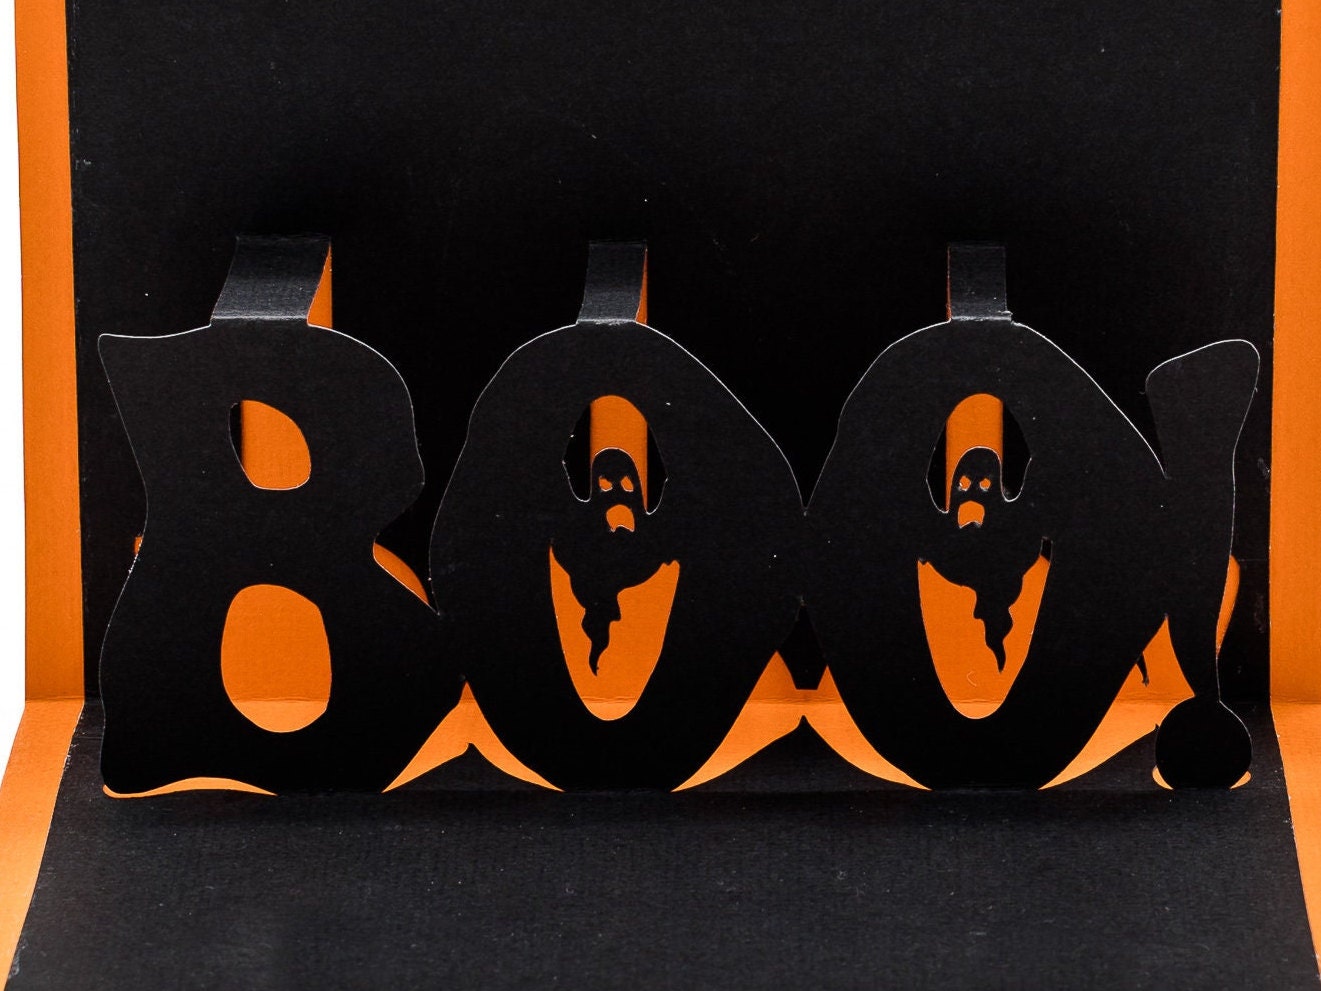 Boo Halloween 3D Pop Up Card | Ghost Design Art | Halloween Greeting Card | Spooky Season Handmade Gift | Unique Keepsake and Decor